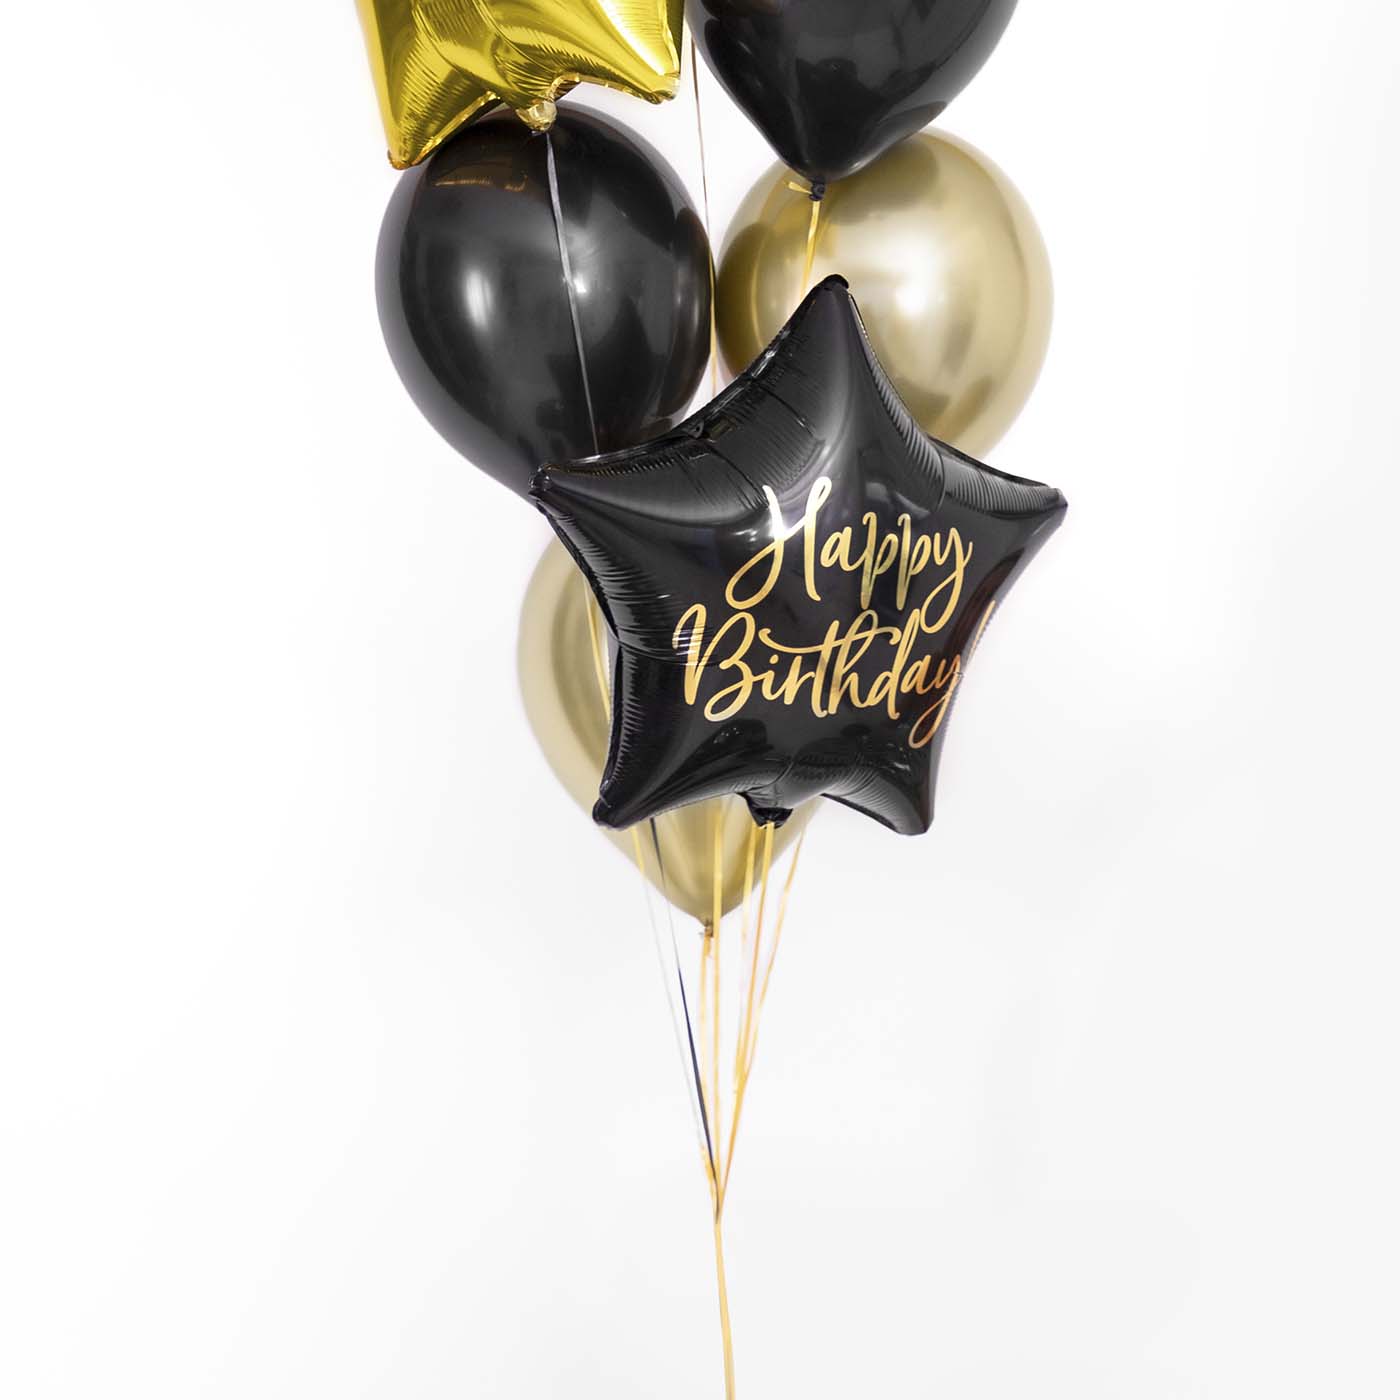 Fail star balloon "Happy Birthday" Black